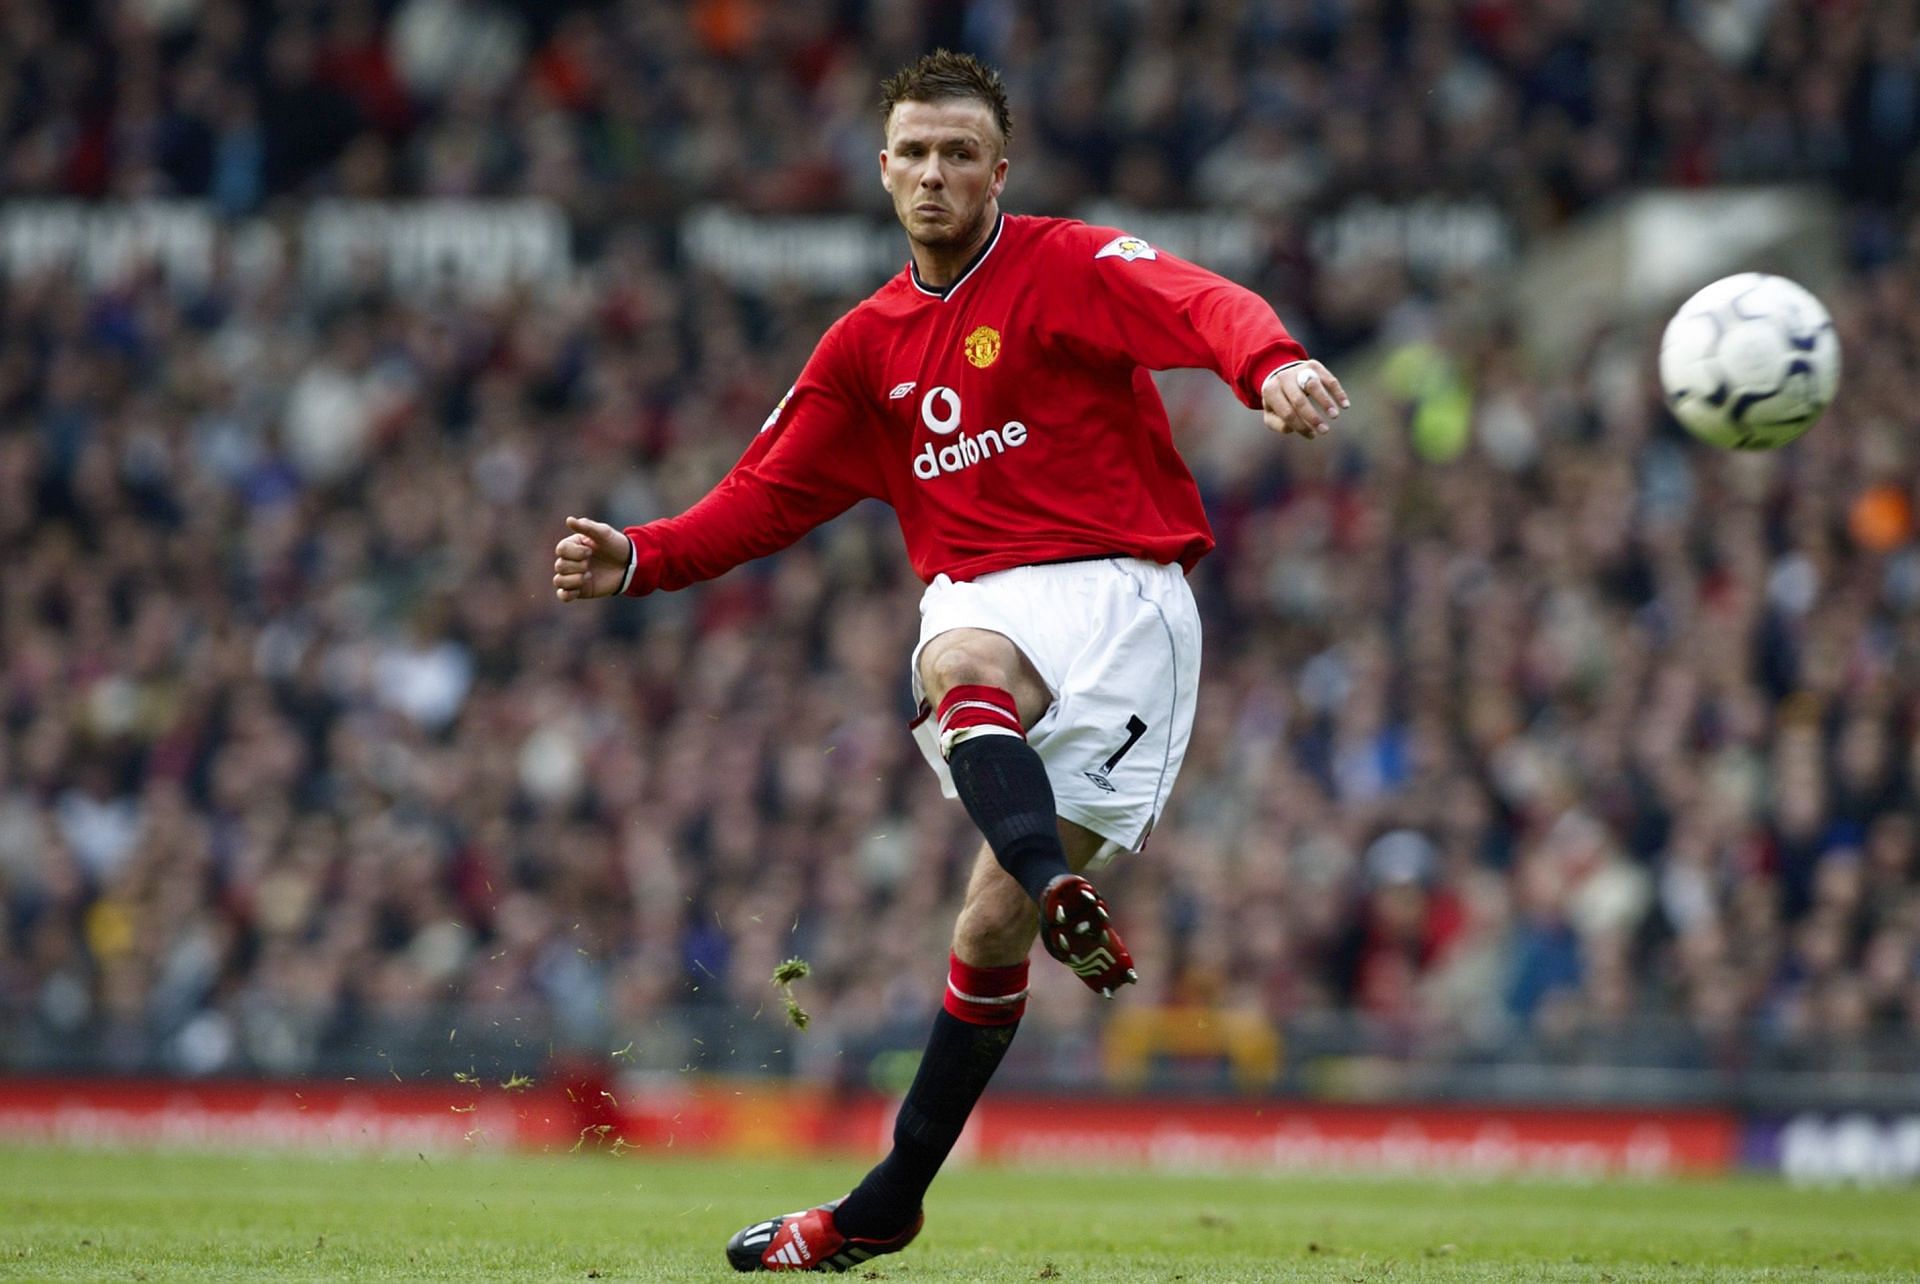 David Beckham takes a trademark free-kick